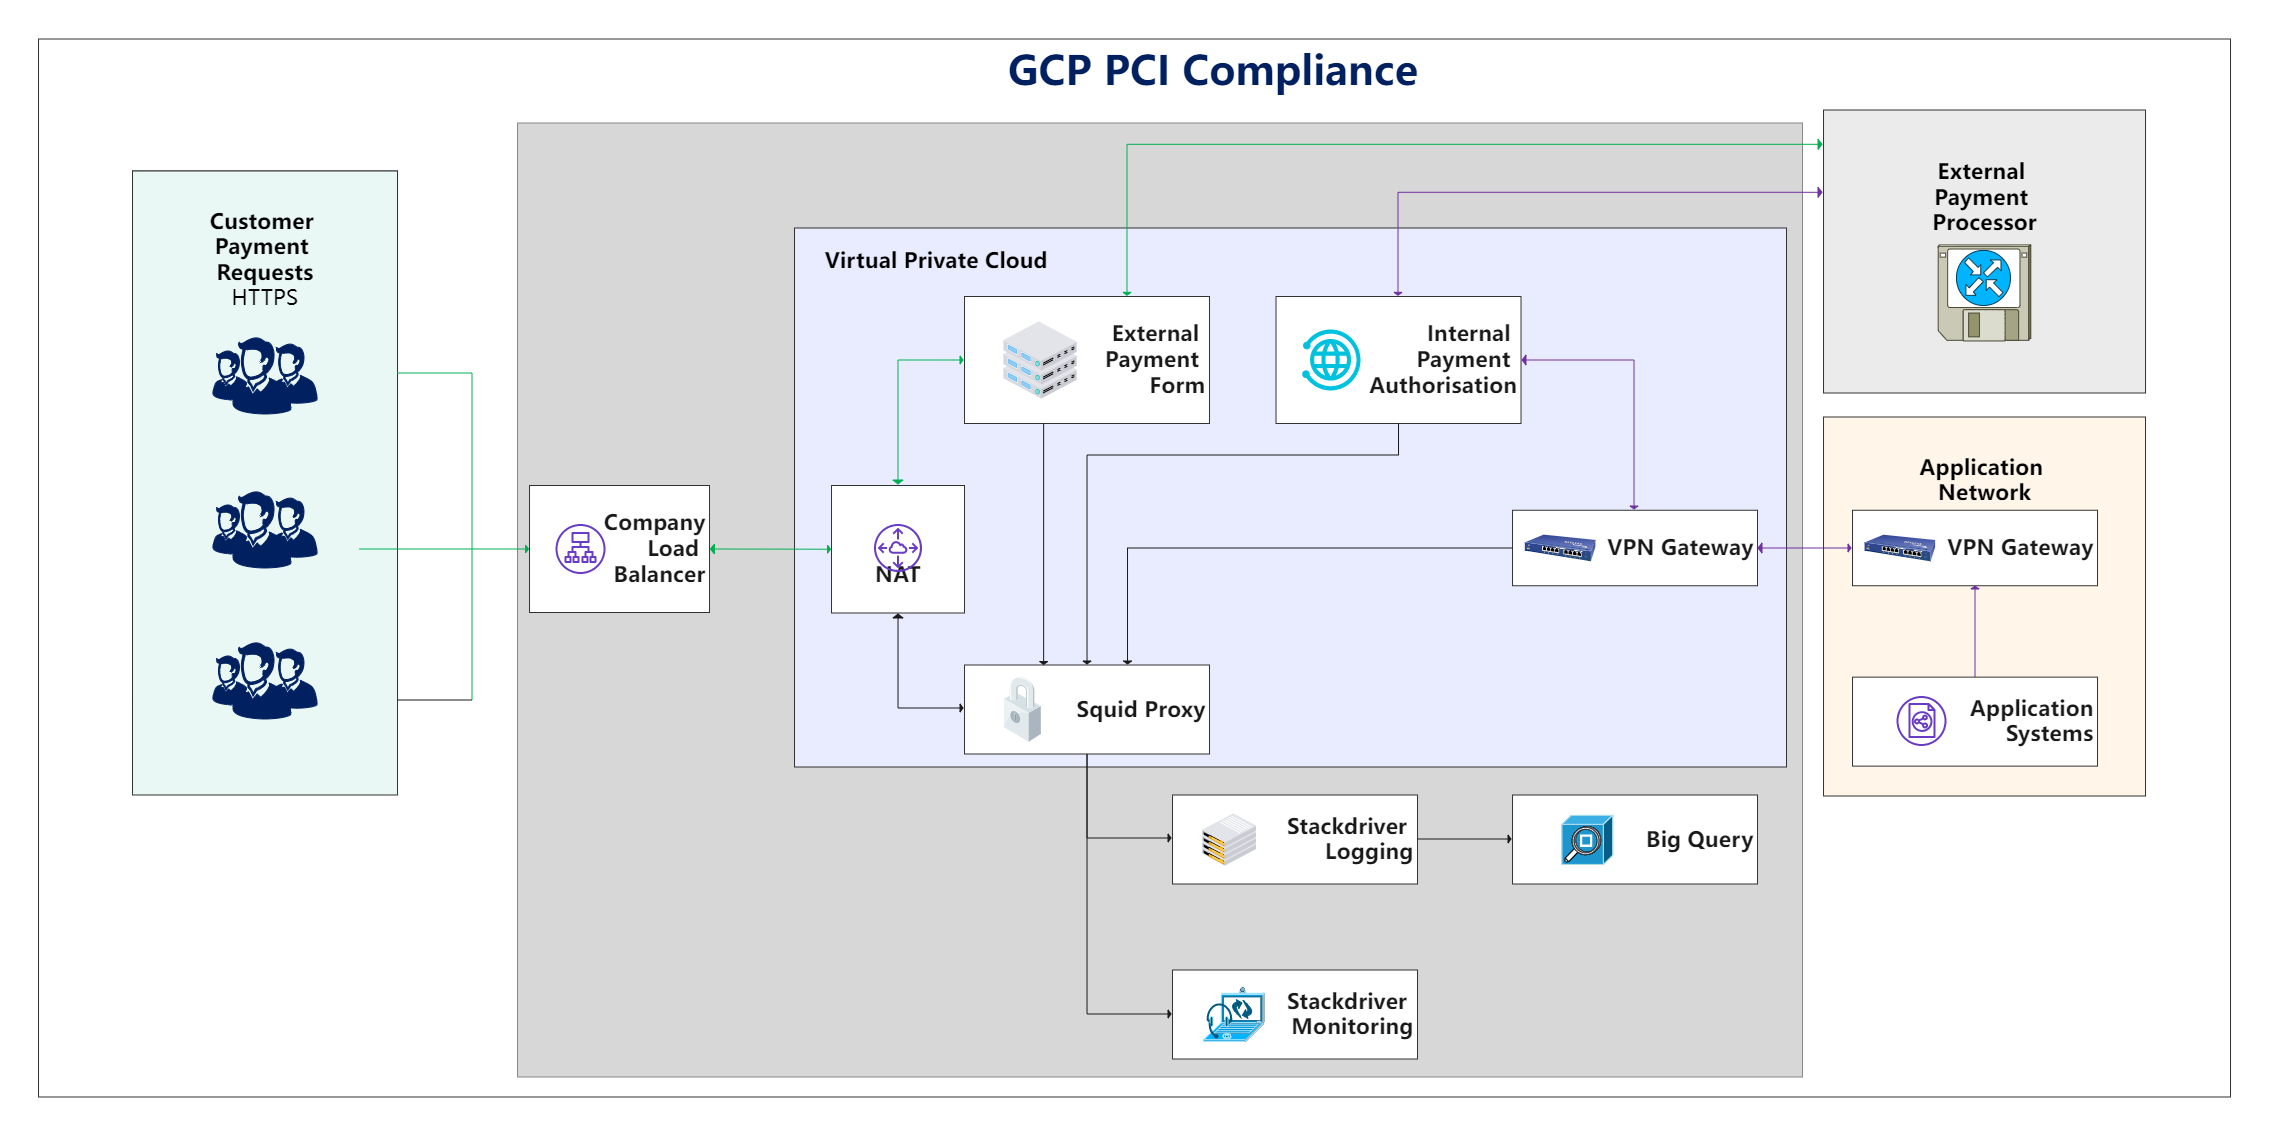 GCP Pci Compliance